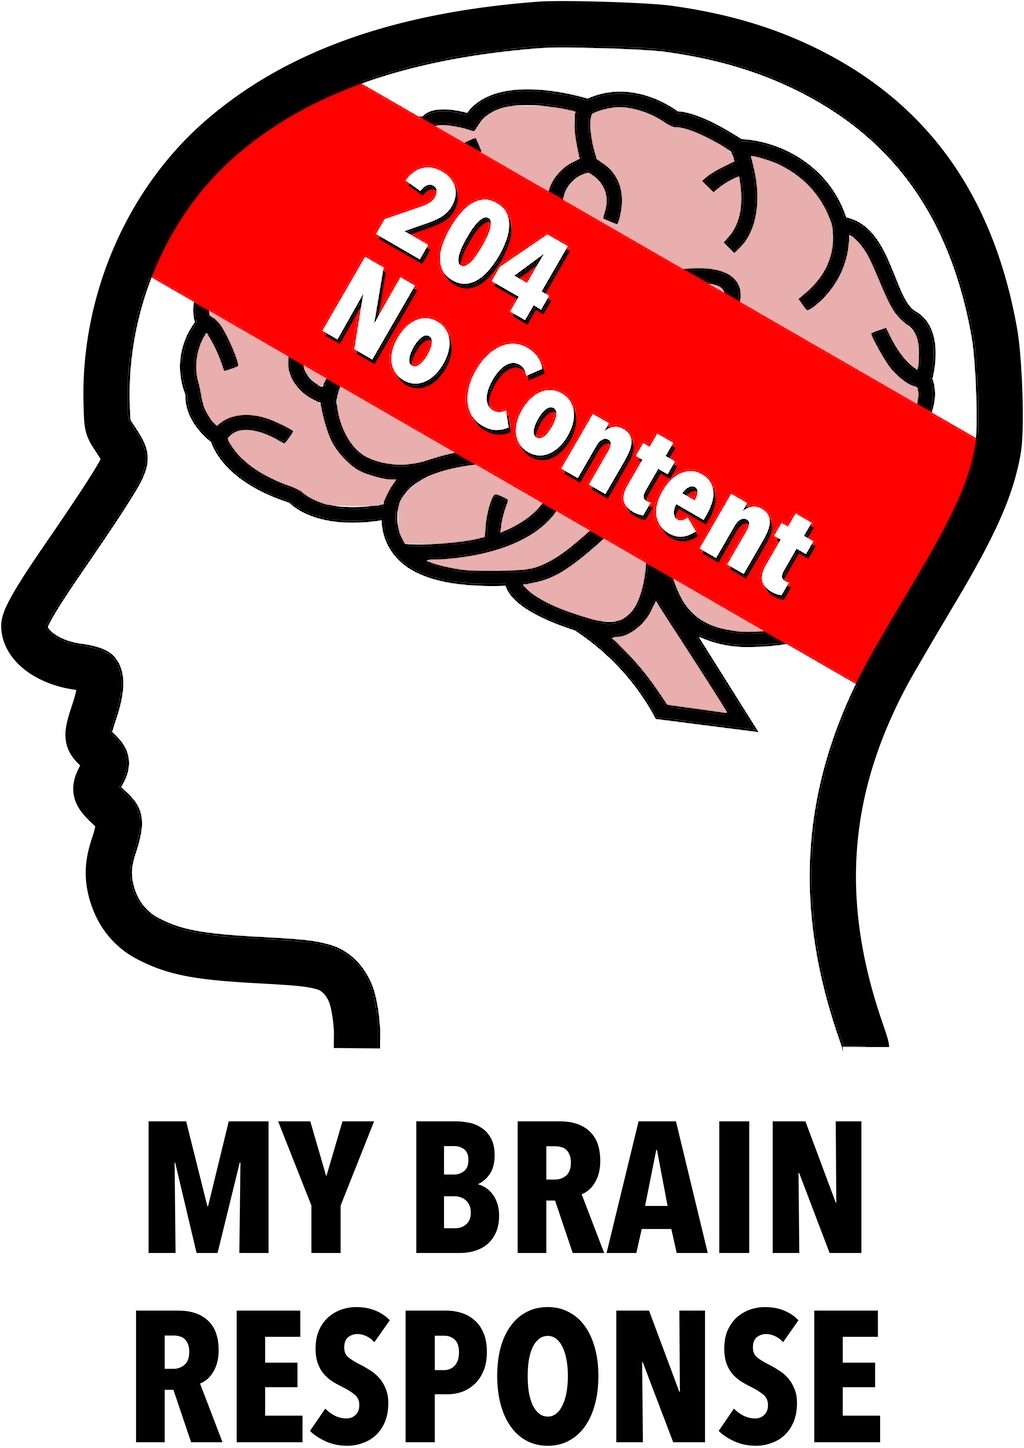 My Brain Response: 204 No Content